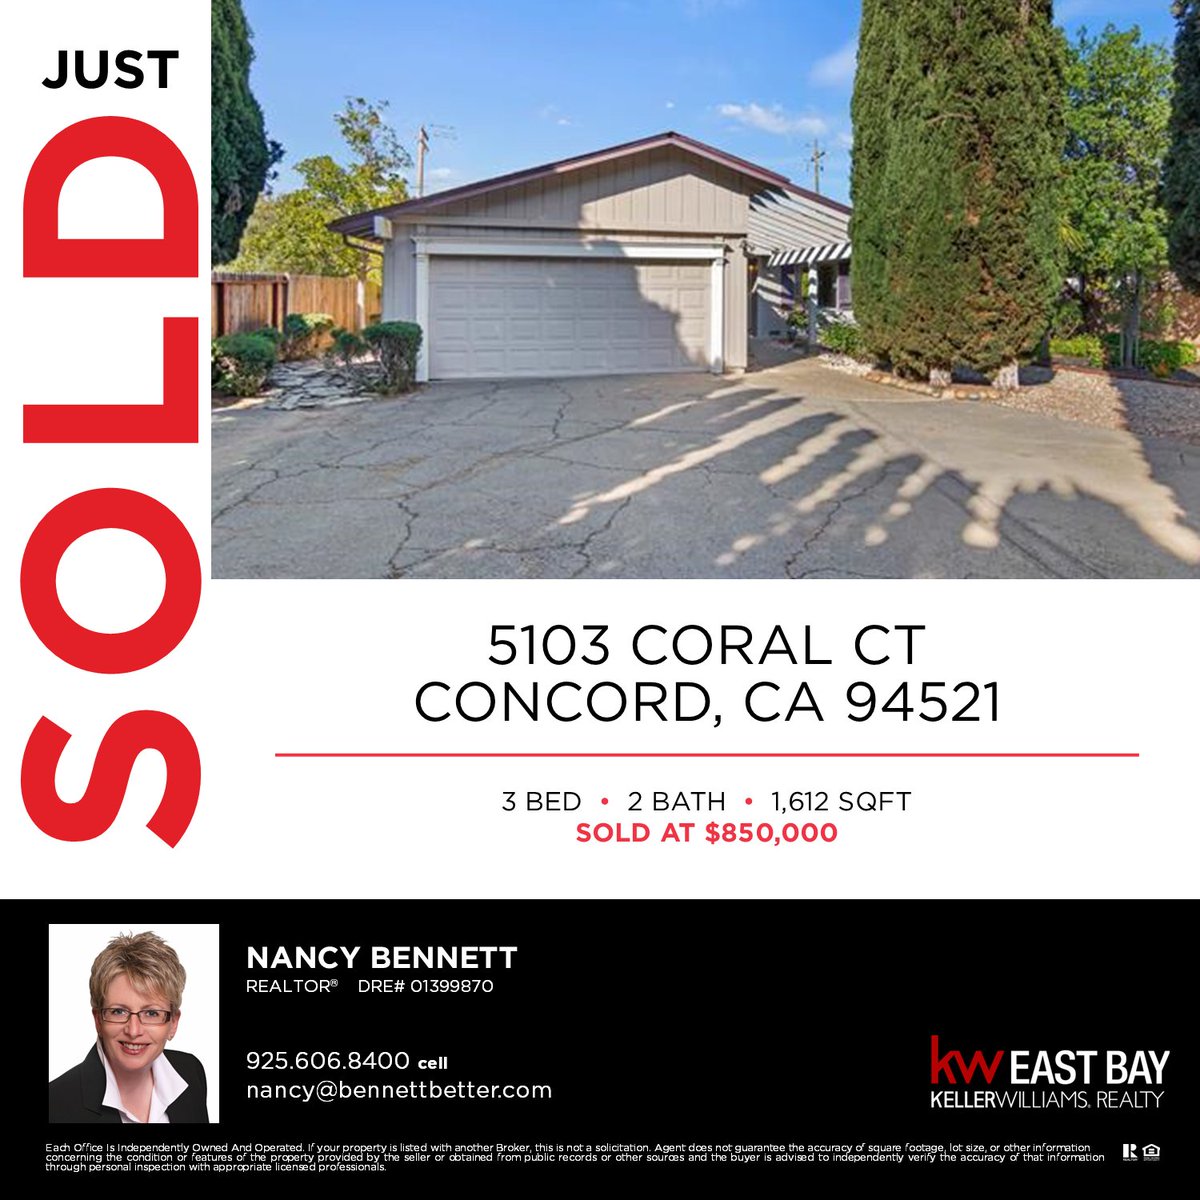 5103 Coral Ct, Concord, CA 94521 - Just Sold by Nancy Bennett!

#kellerwilliams #bayarearealestate #bayarearealtor